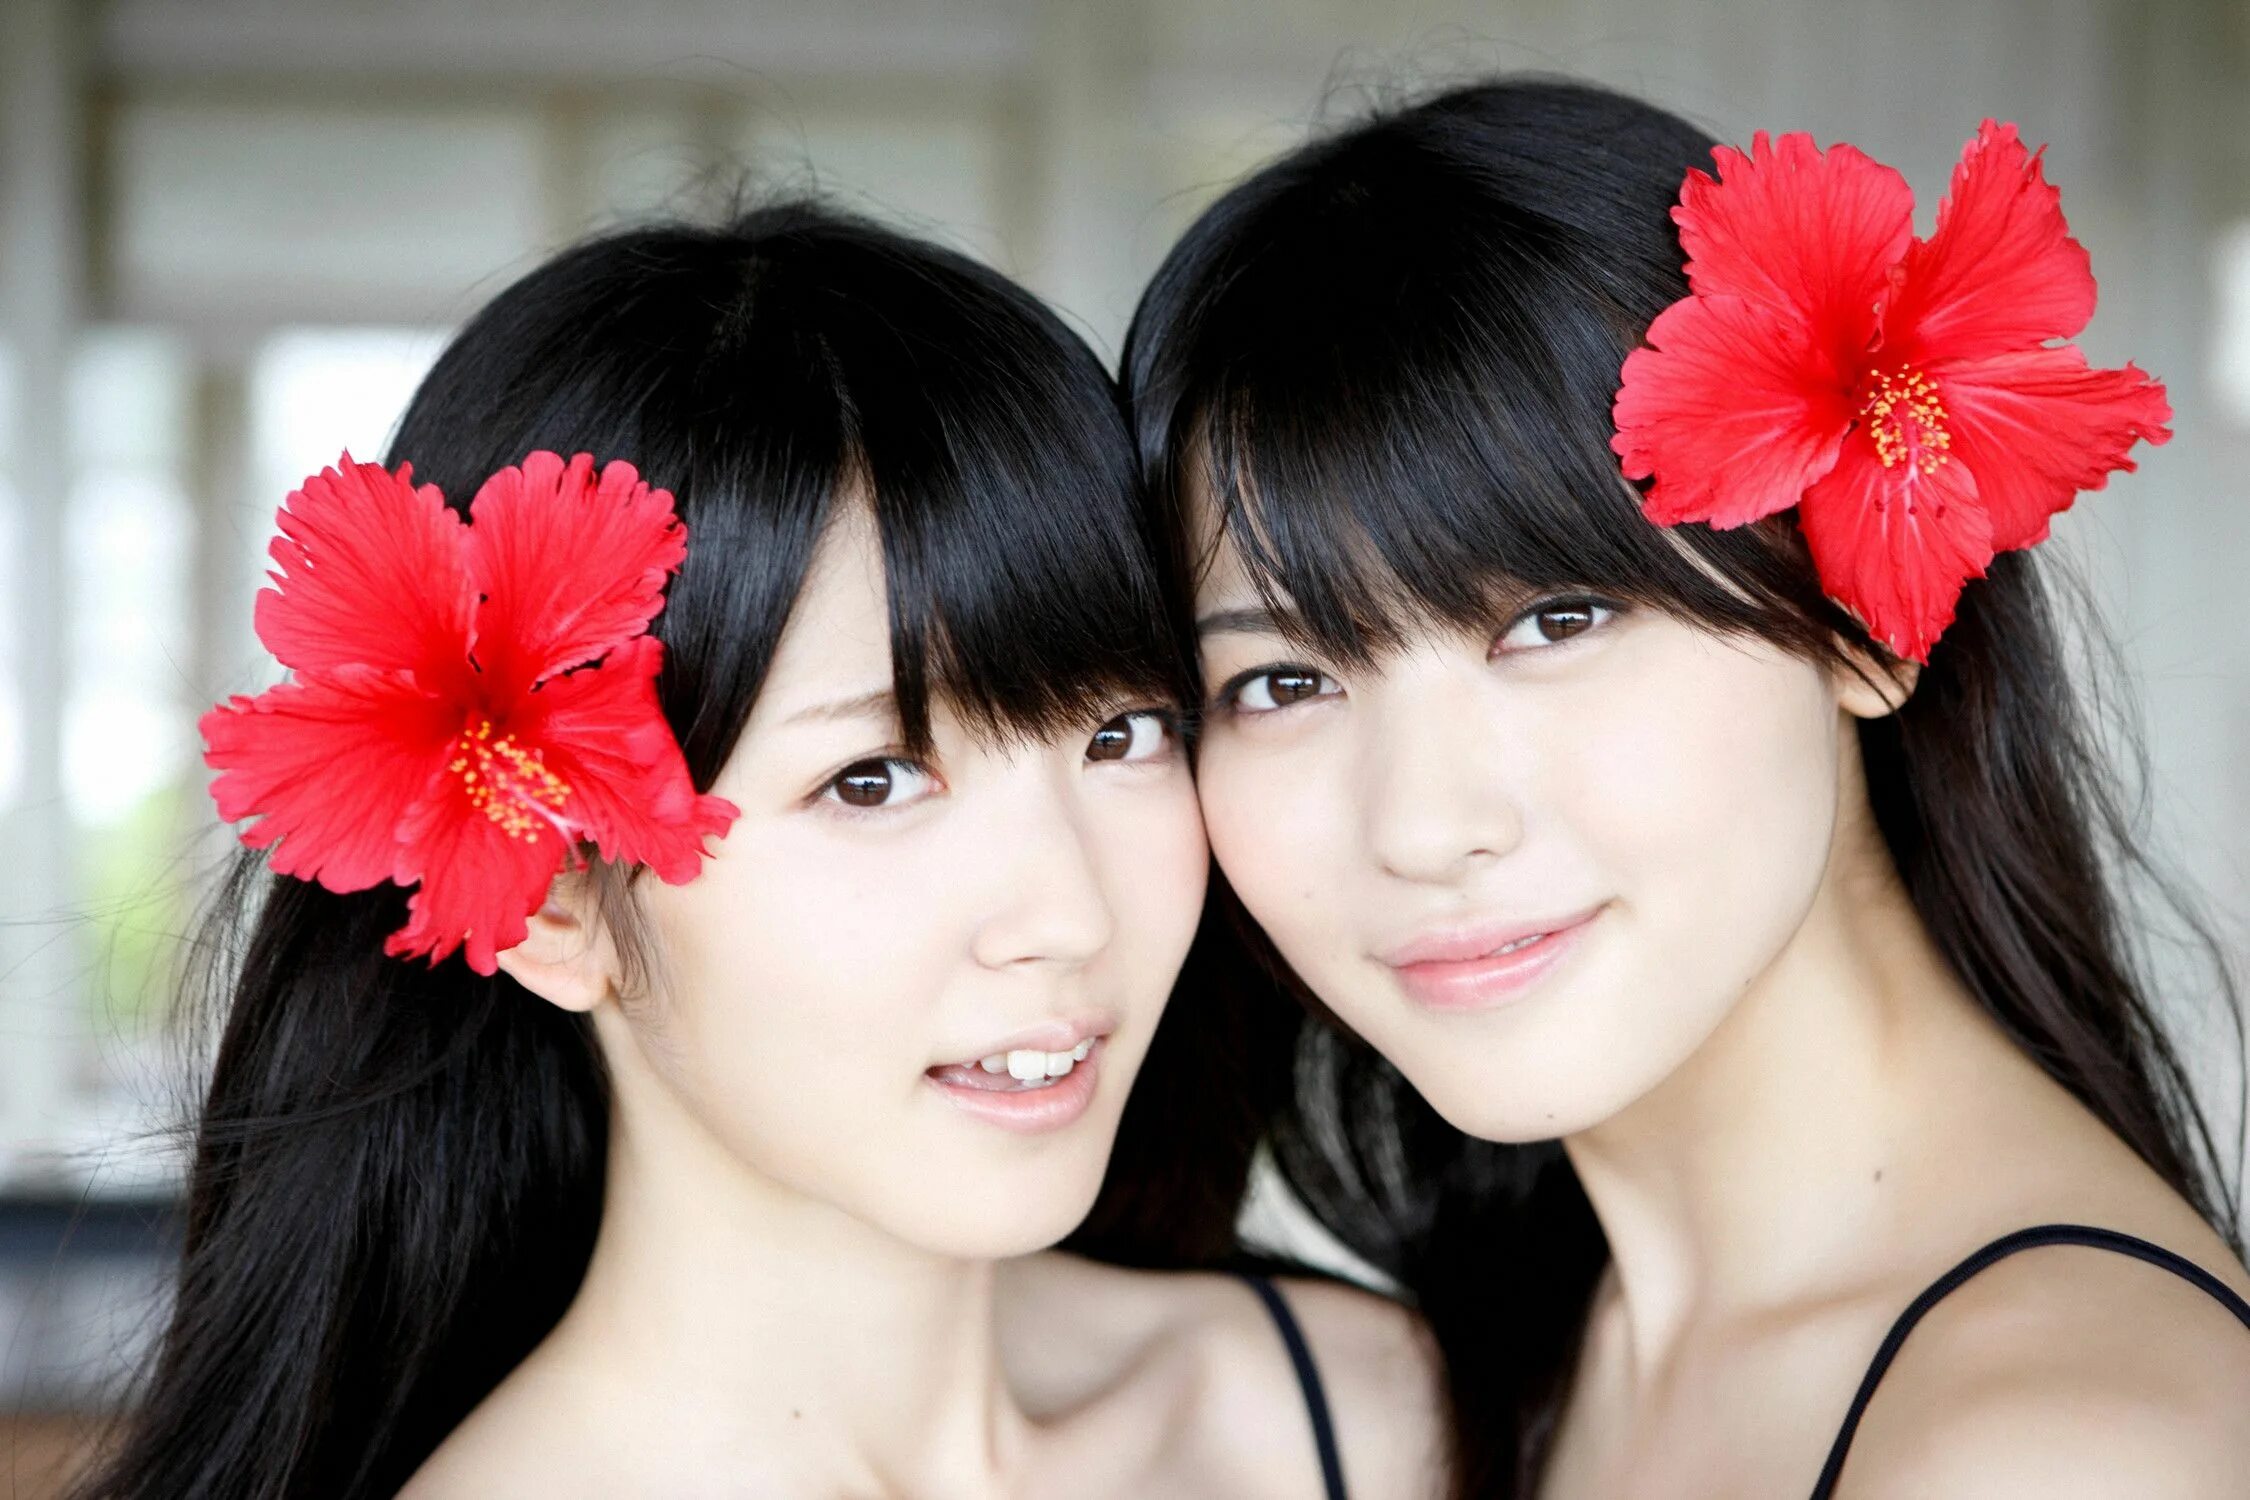 Airi Suzuki and Maimi Yajima. Японские девушки подруги. Японские девушки для любви. Японские девочки групповое. Japanese girl lesbian